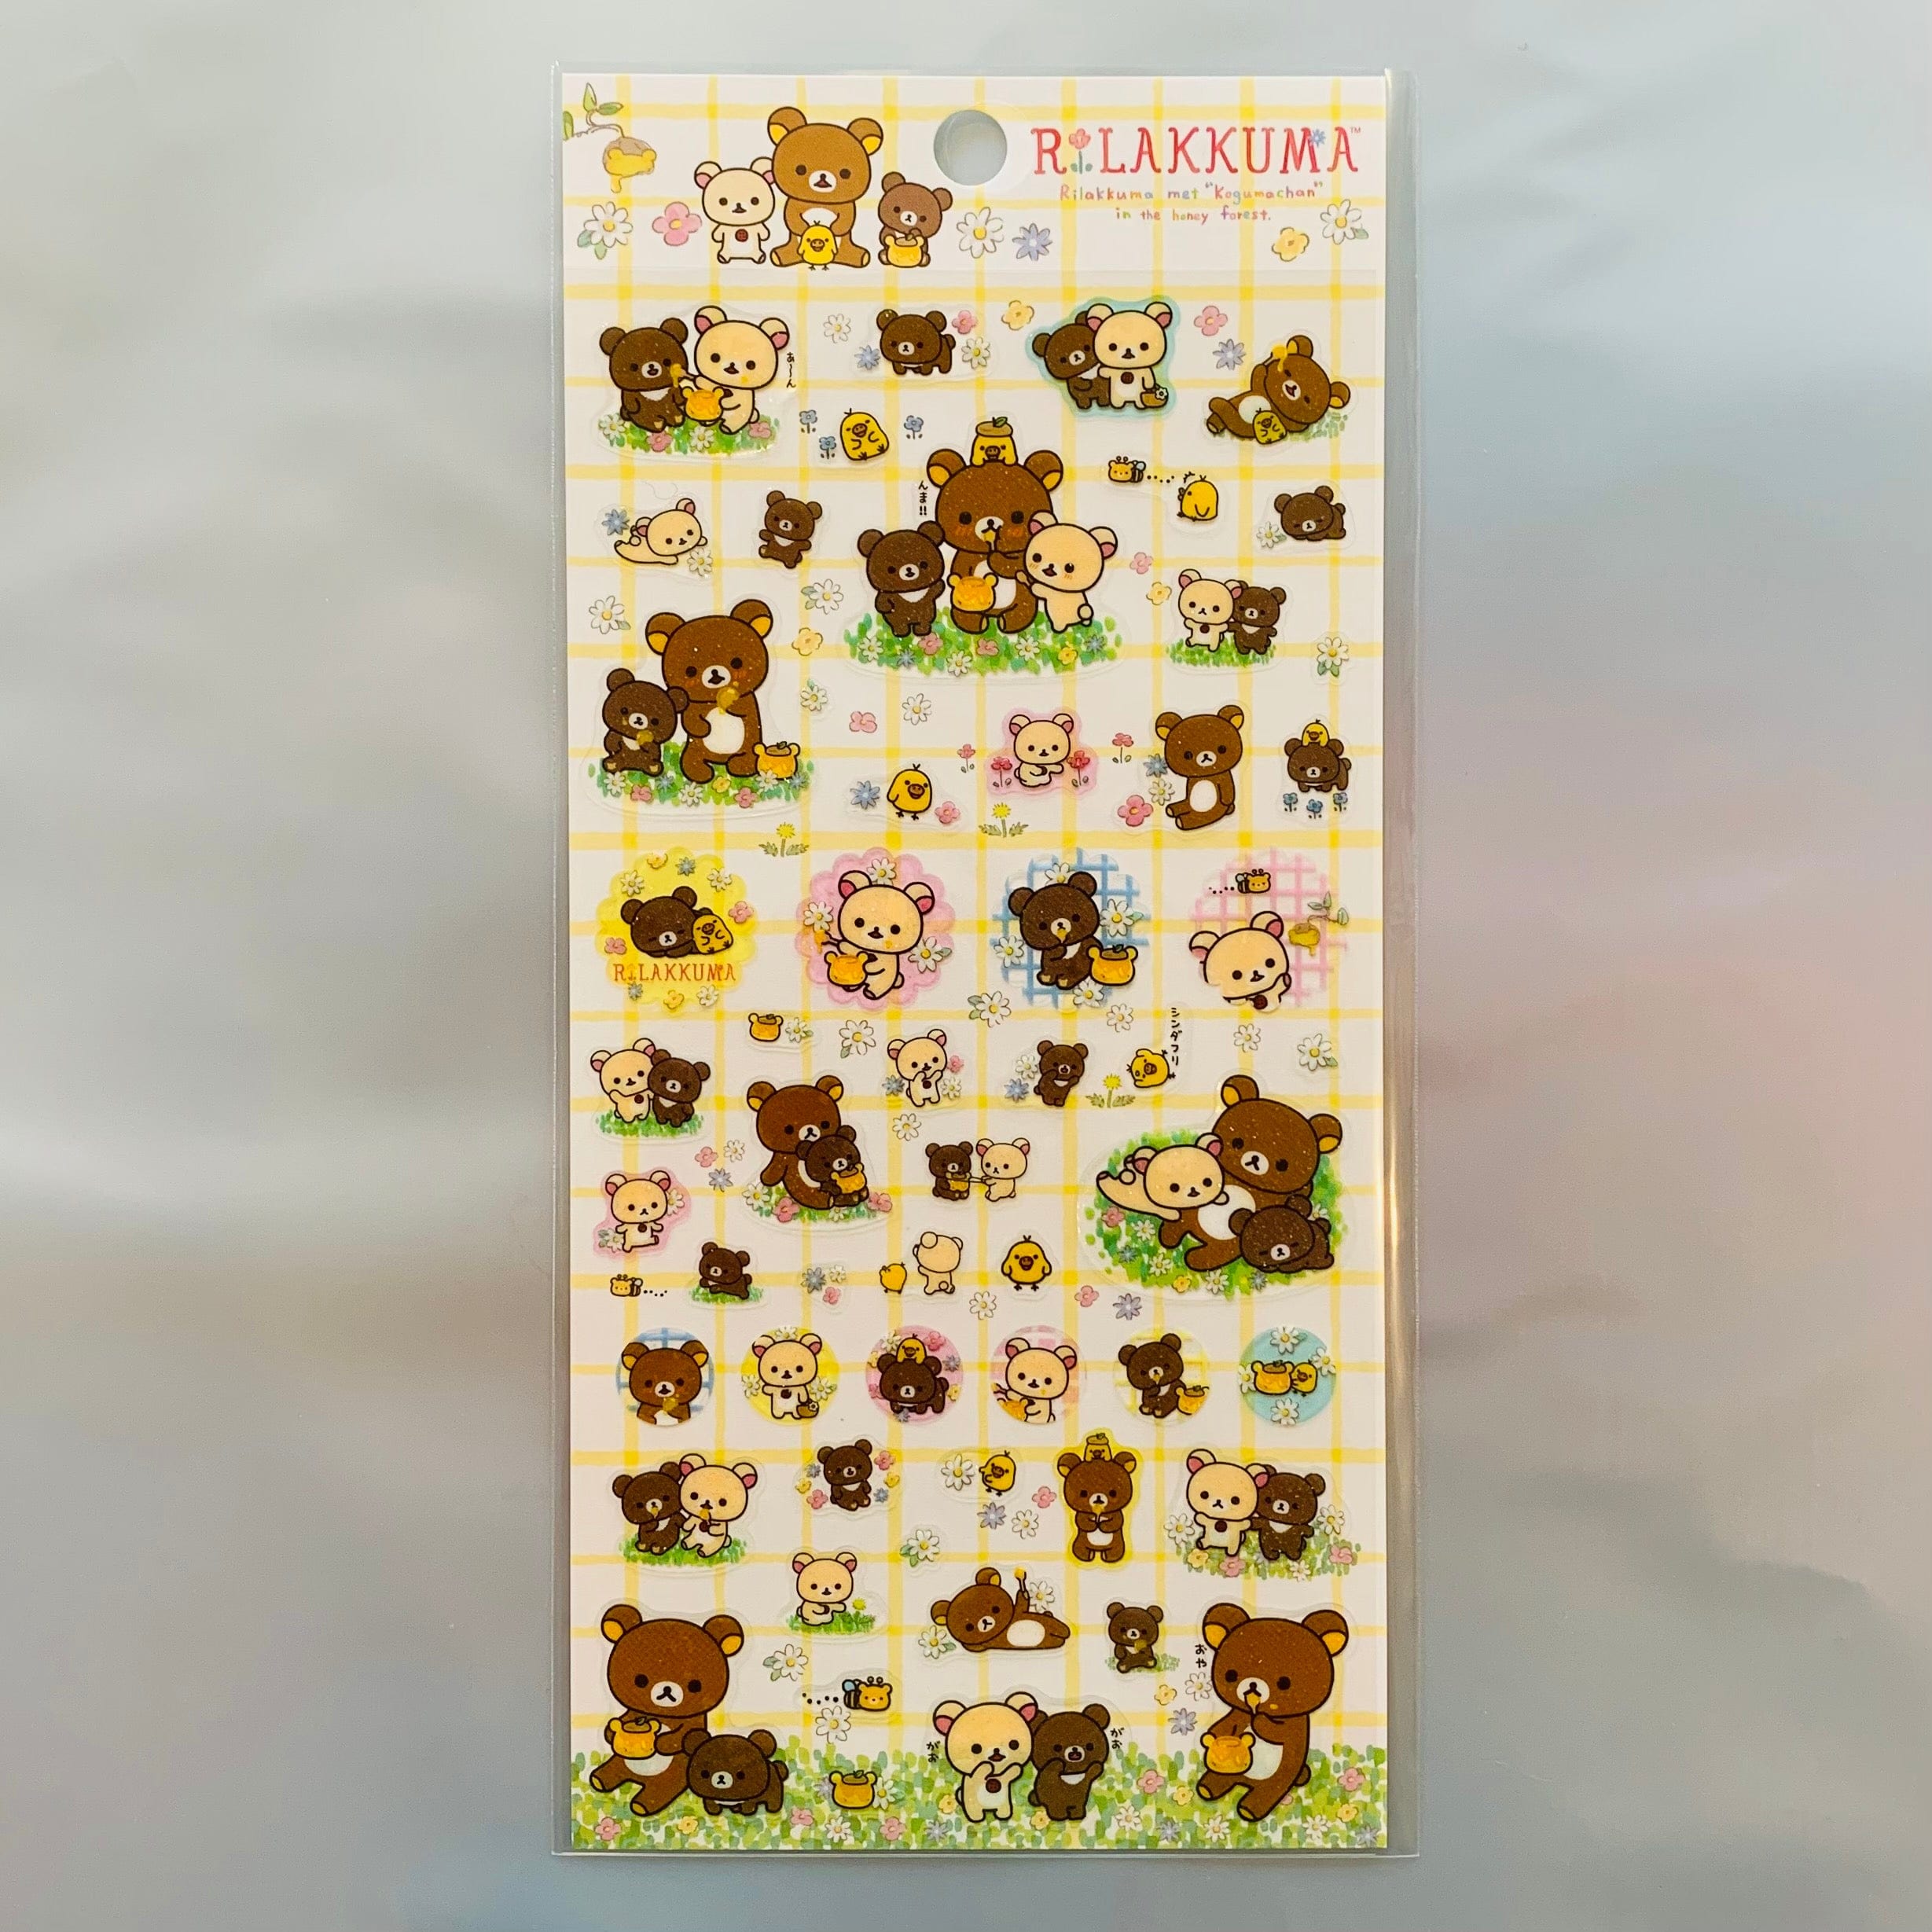 San-X Rilakkuma Stickers with Gold Foil Accents: Little Bear Face